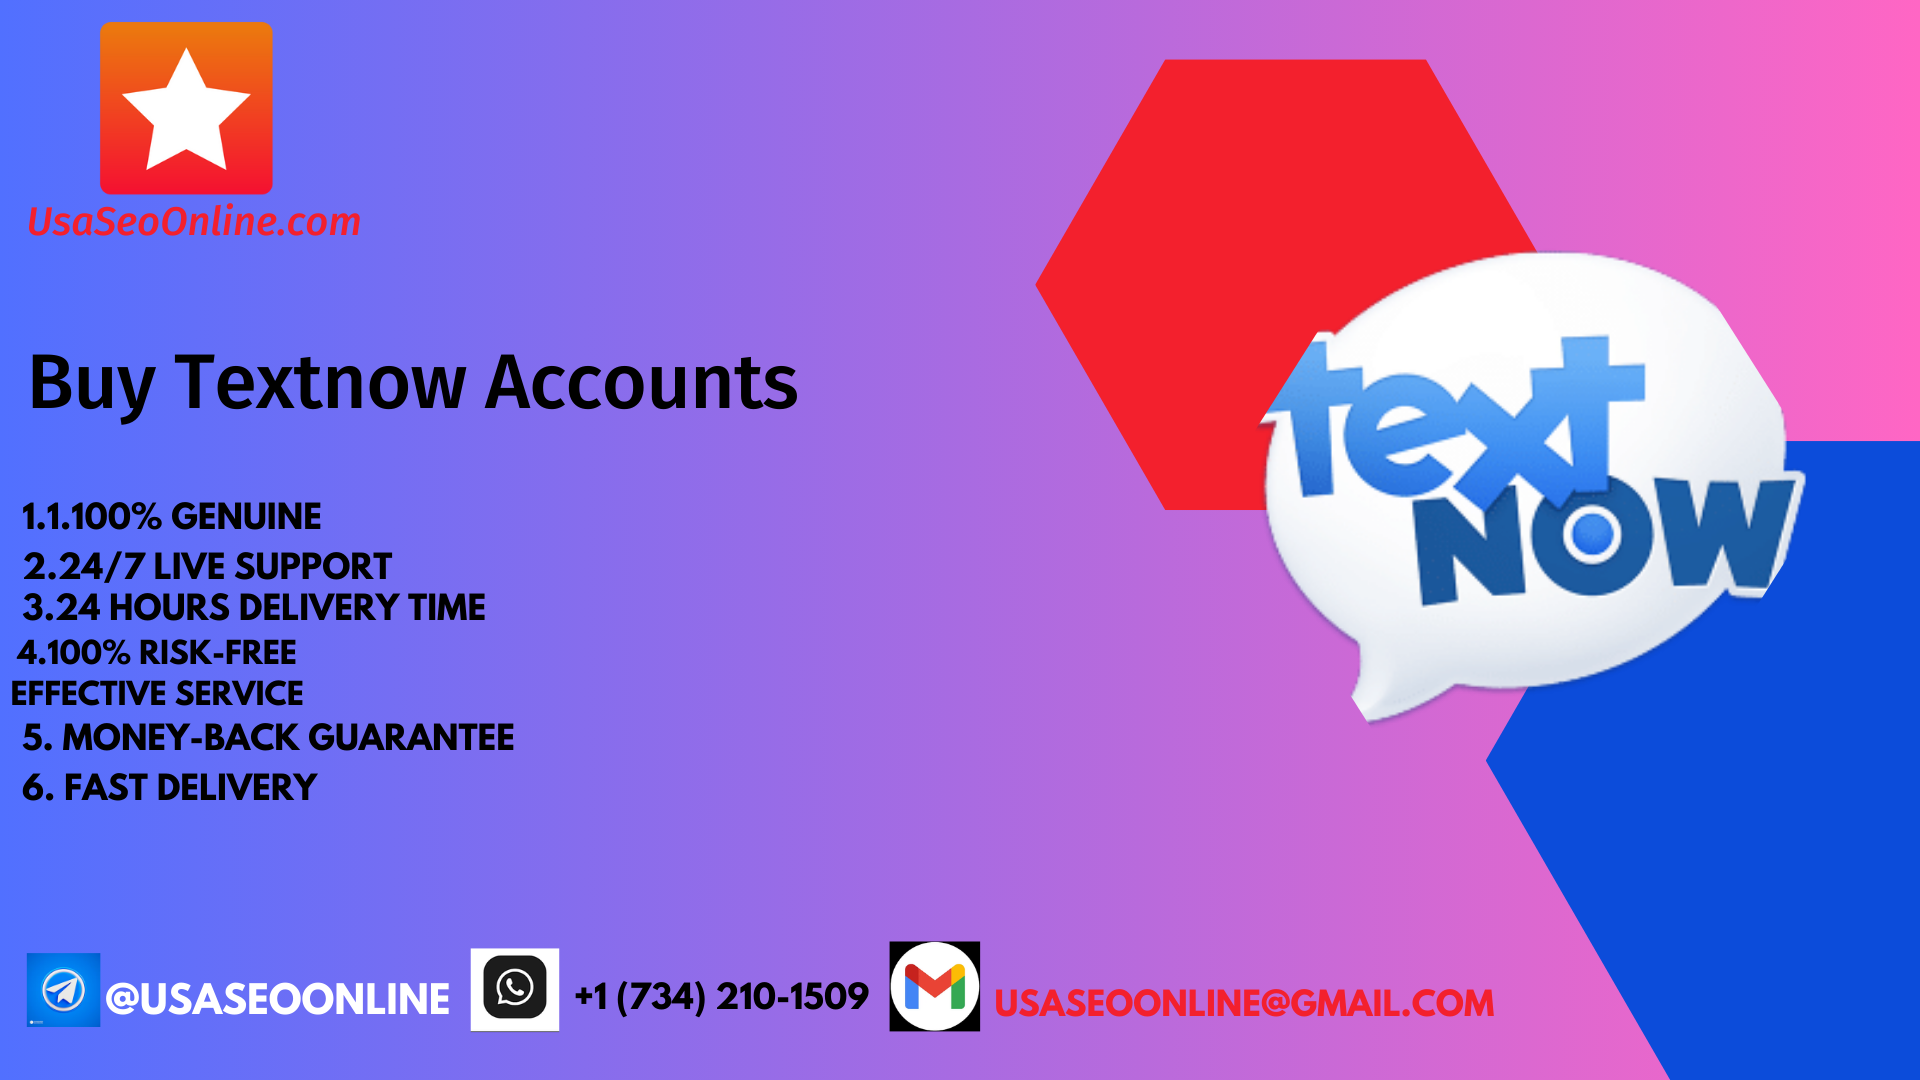 Buy Textnow Accounts - USA SEO Online